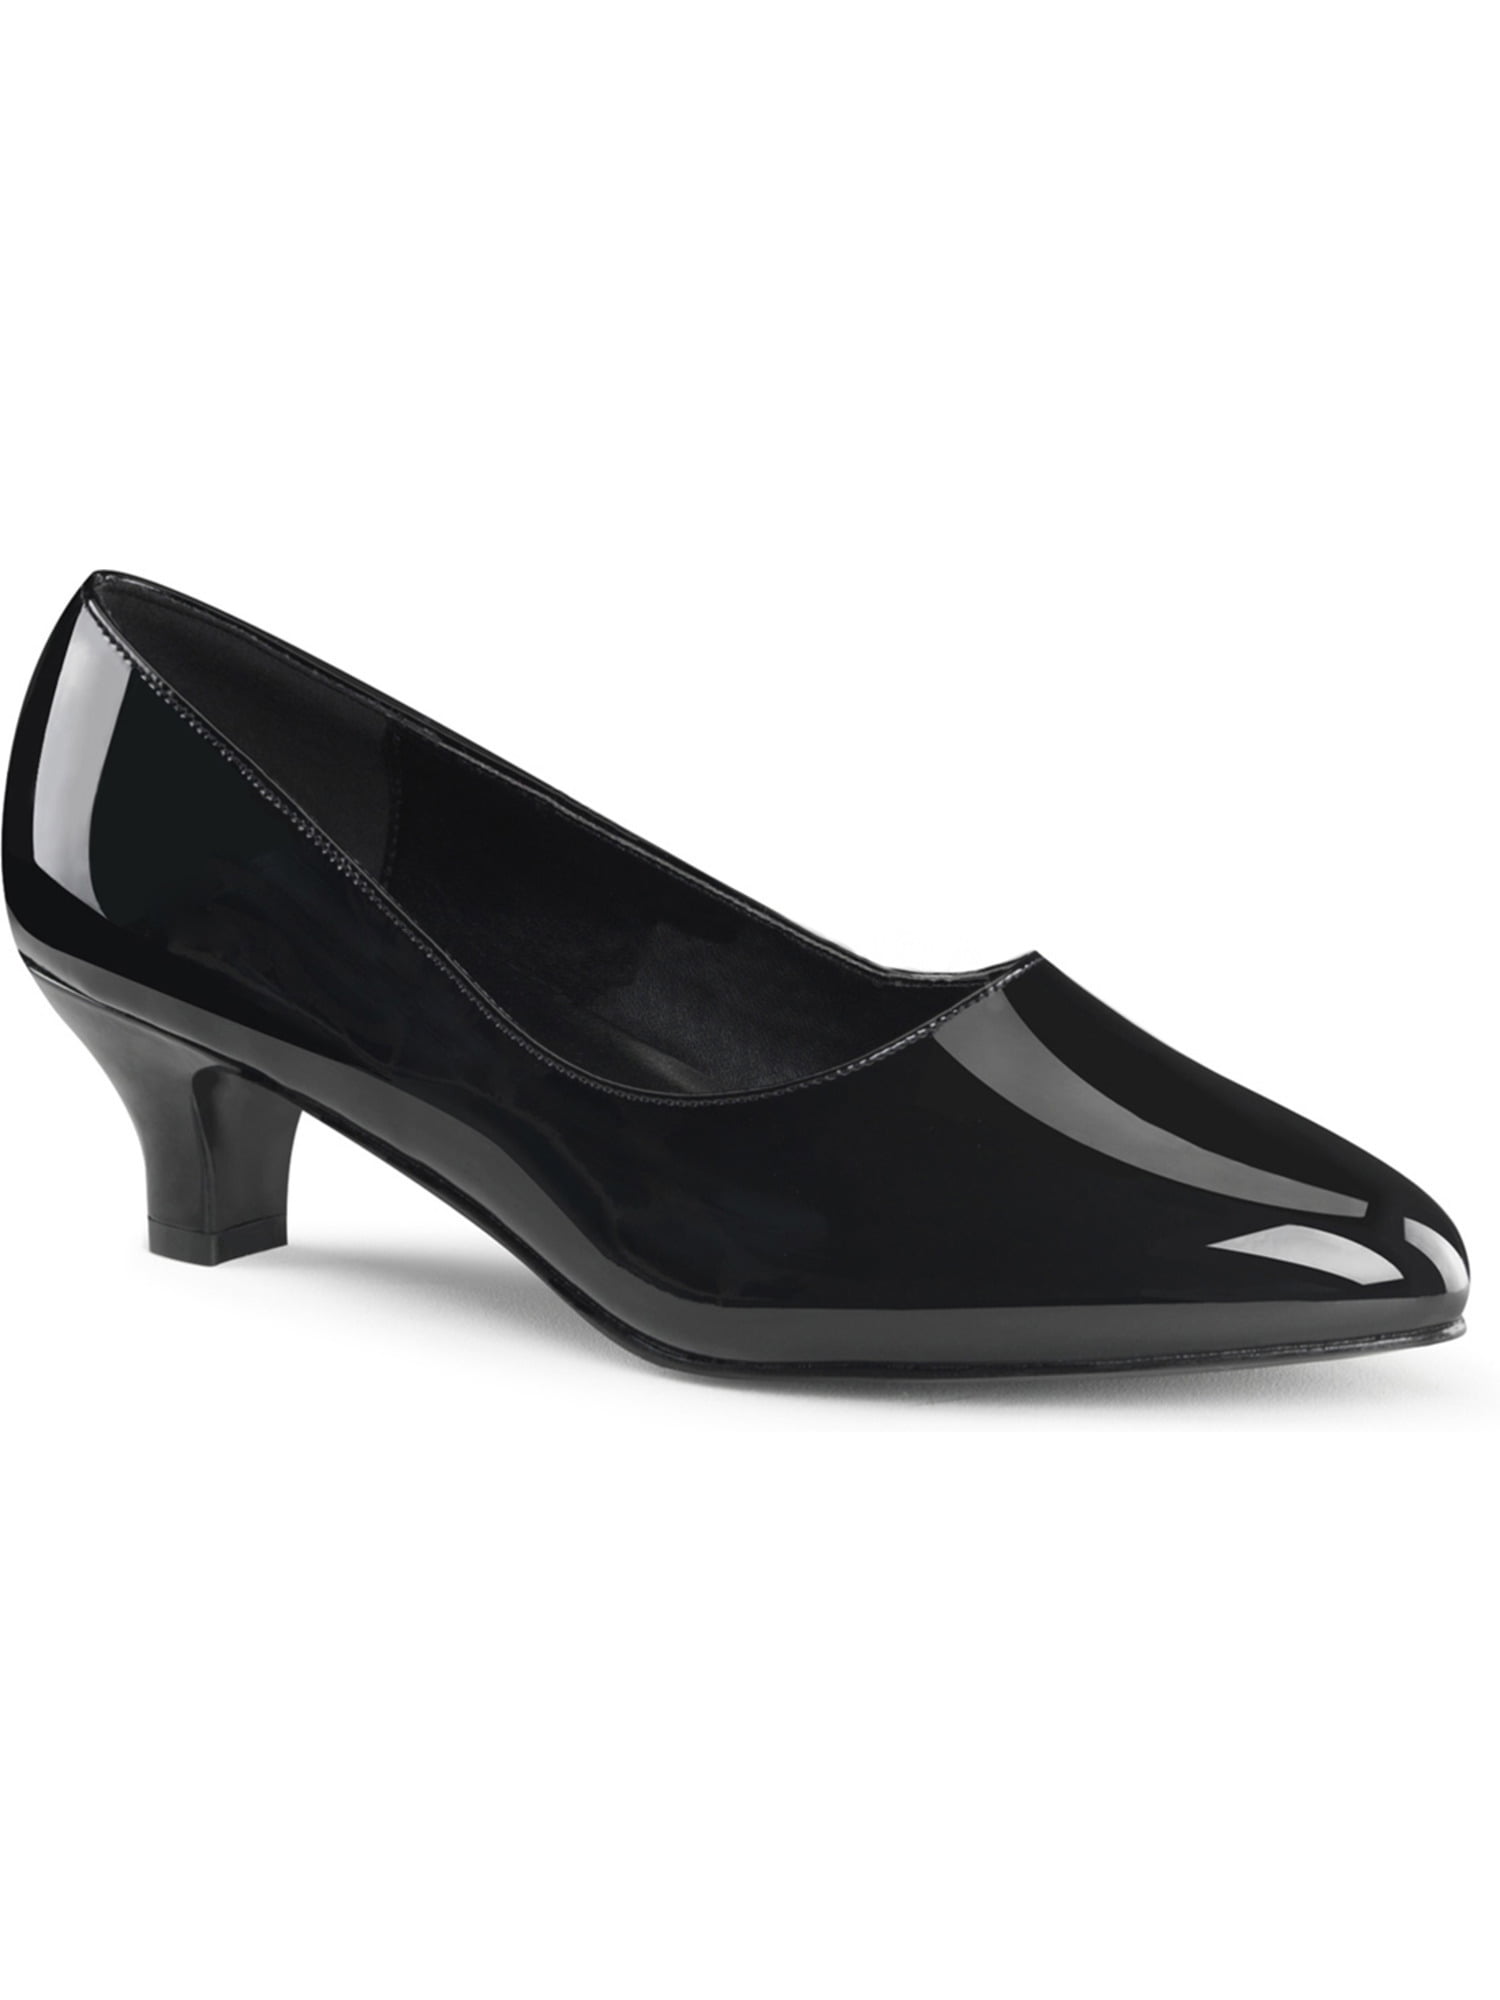 womens 2 inch heels classic pump black 